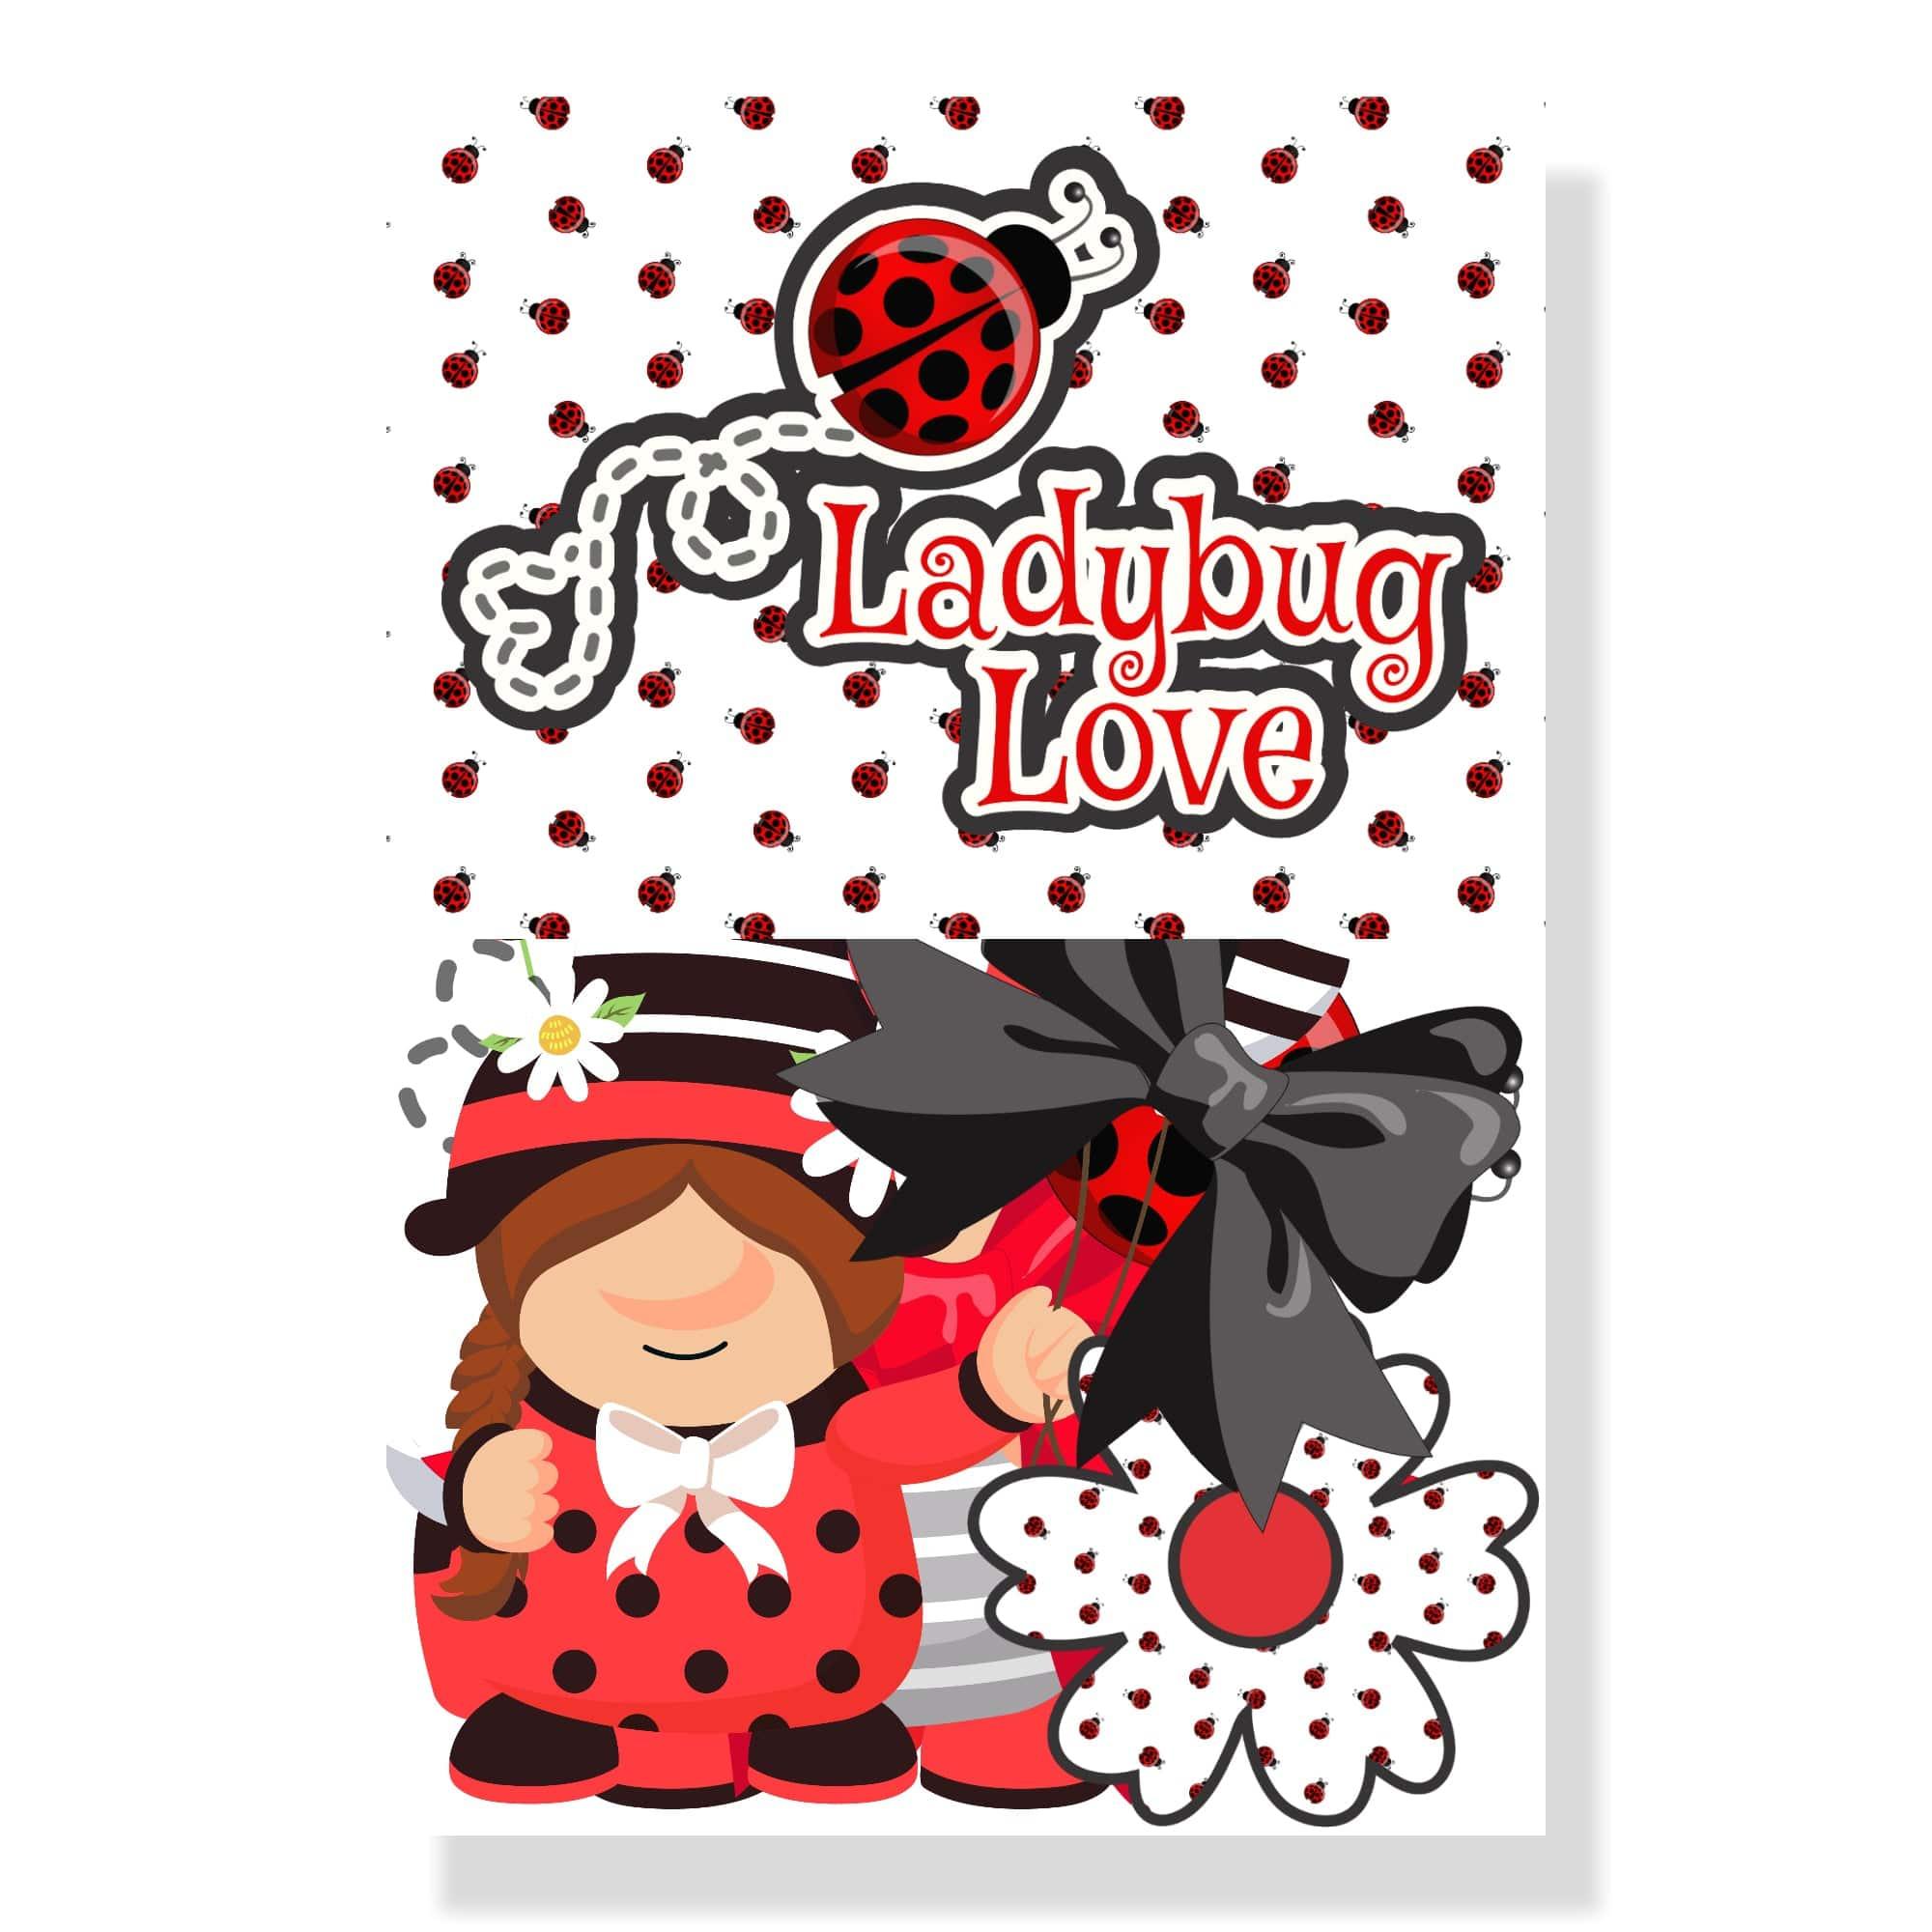 Ladybug Love 12 x 12 Scrapbook Paper & Embellishment Kit by SSC Designs